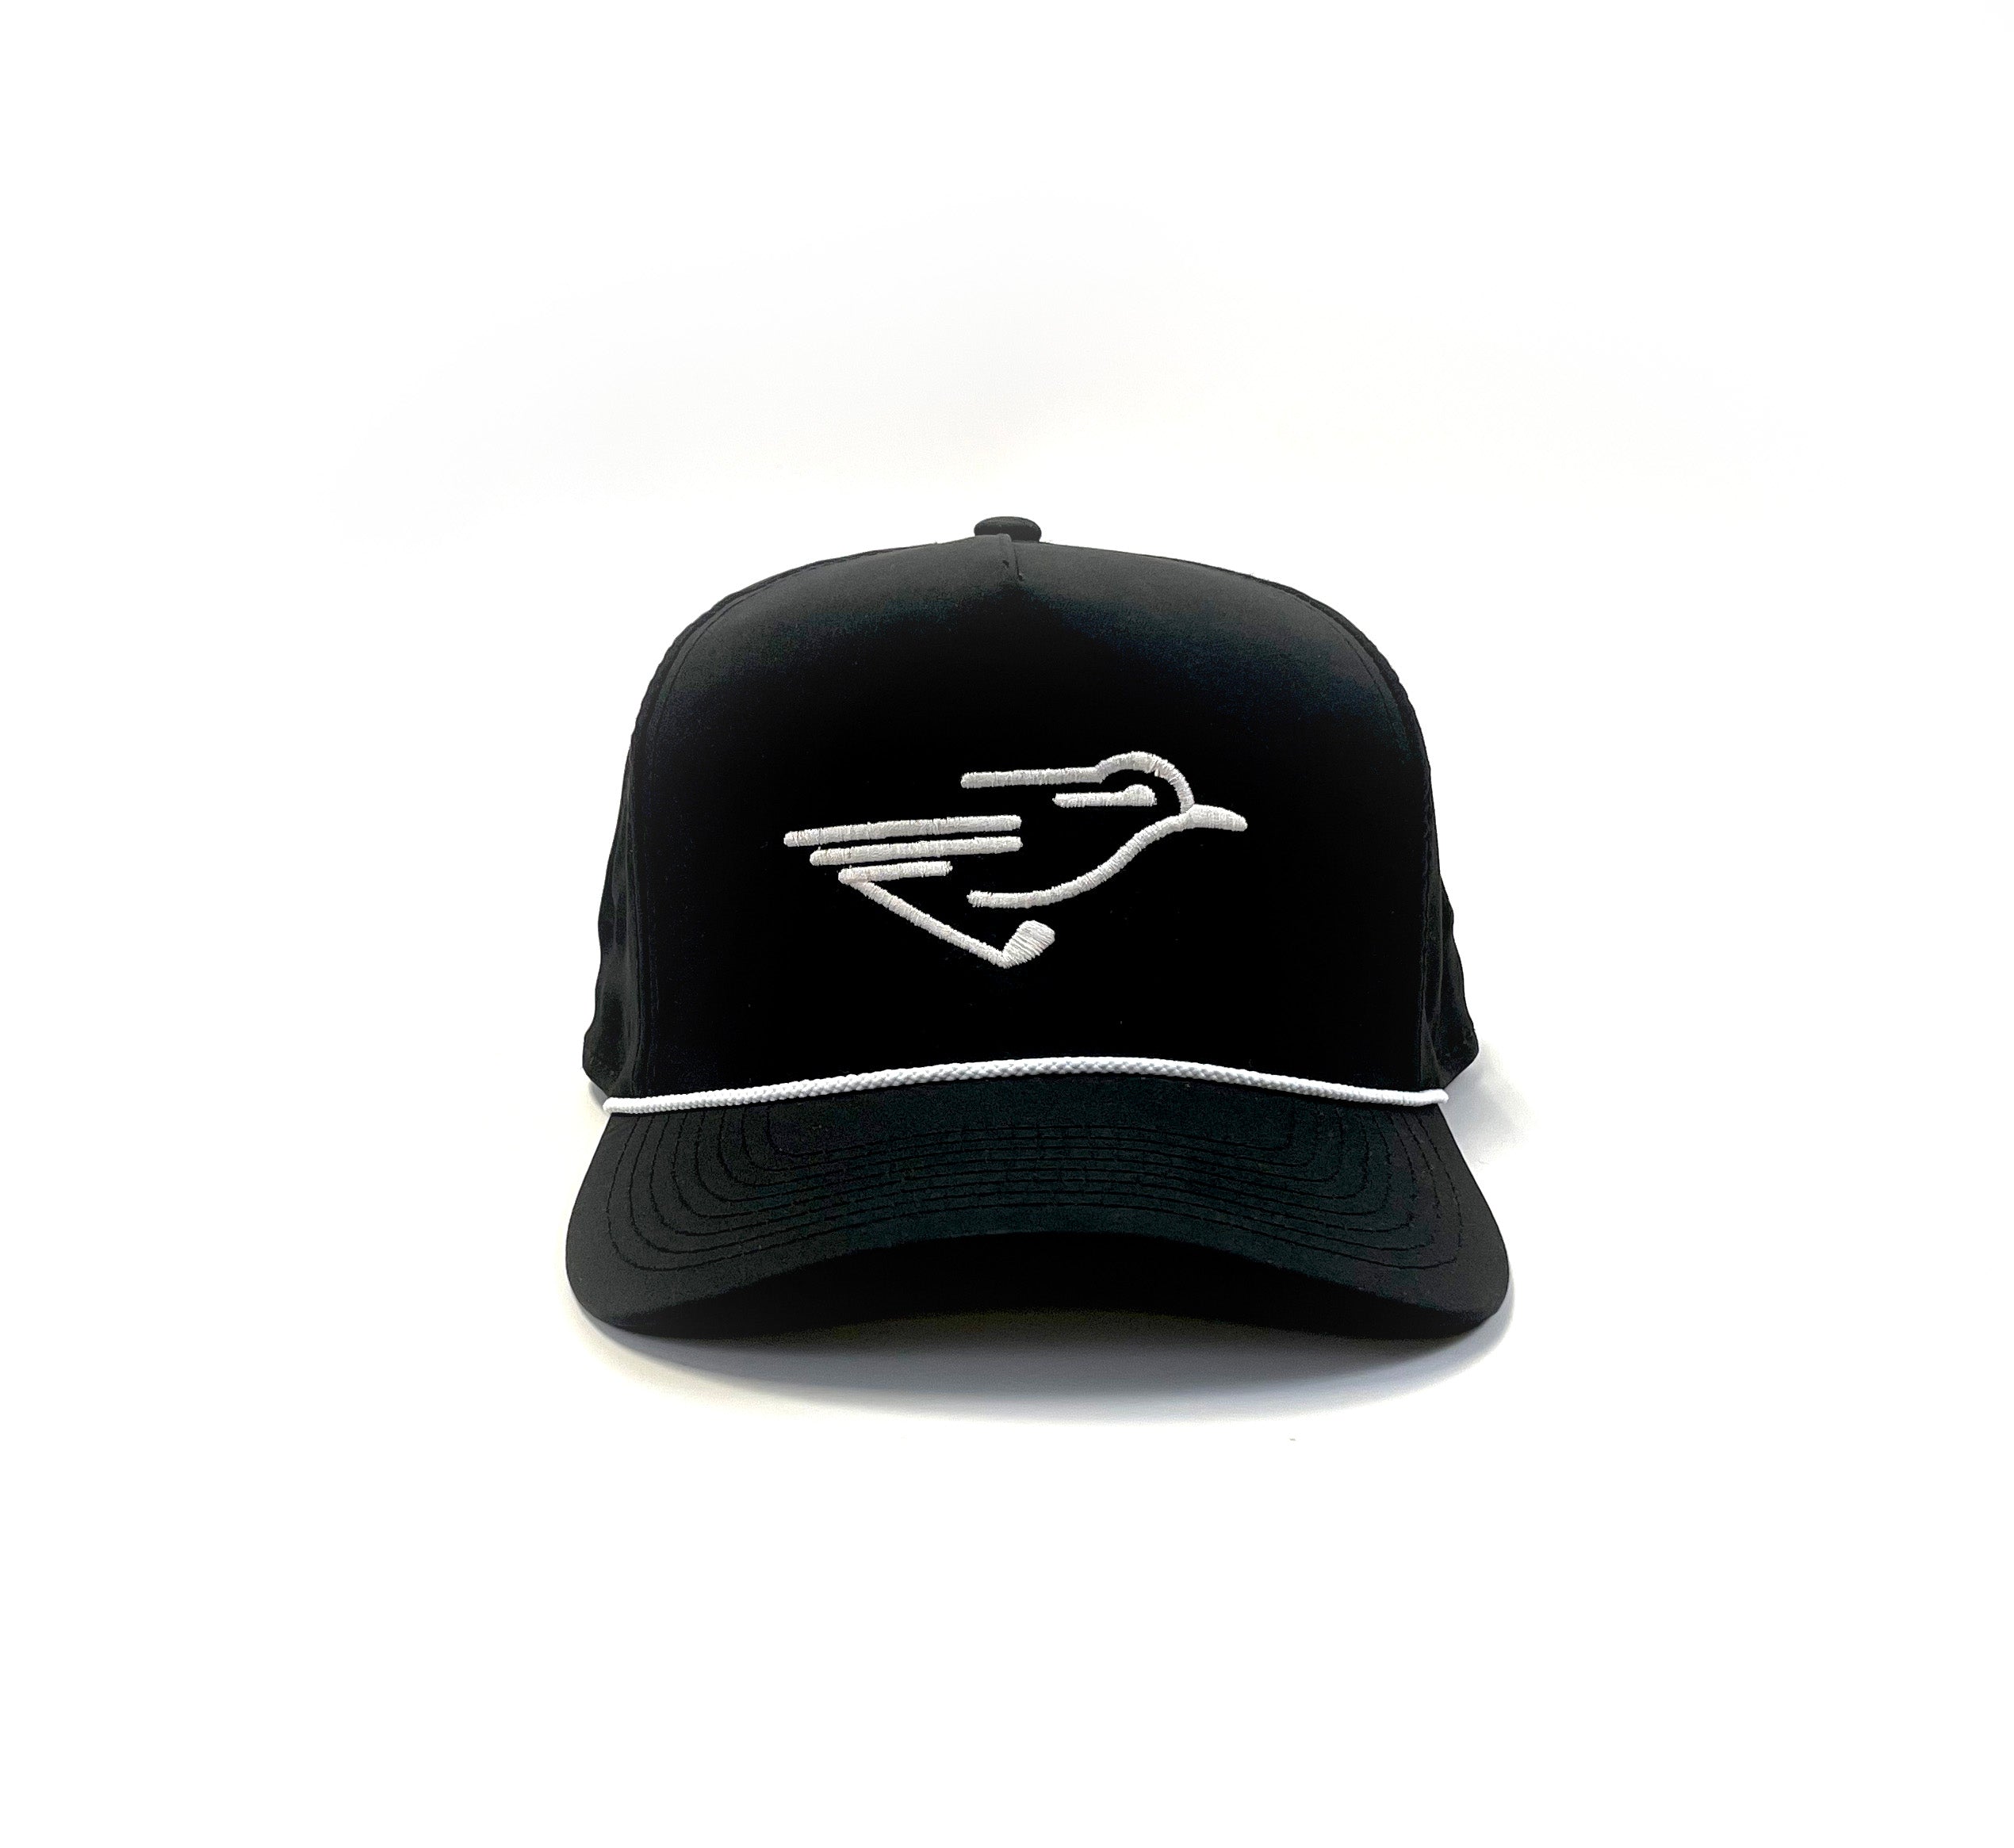 Chaparral Black Bird Snapback Rope Hat – Chaparral Golf Co.